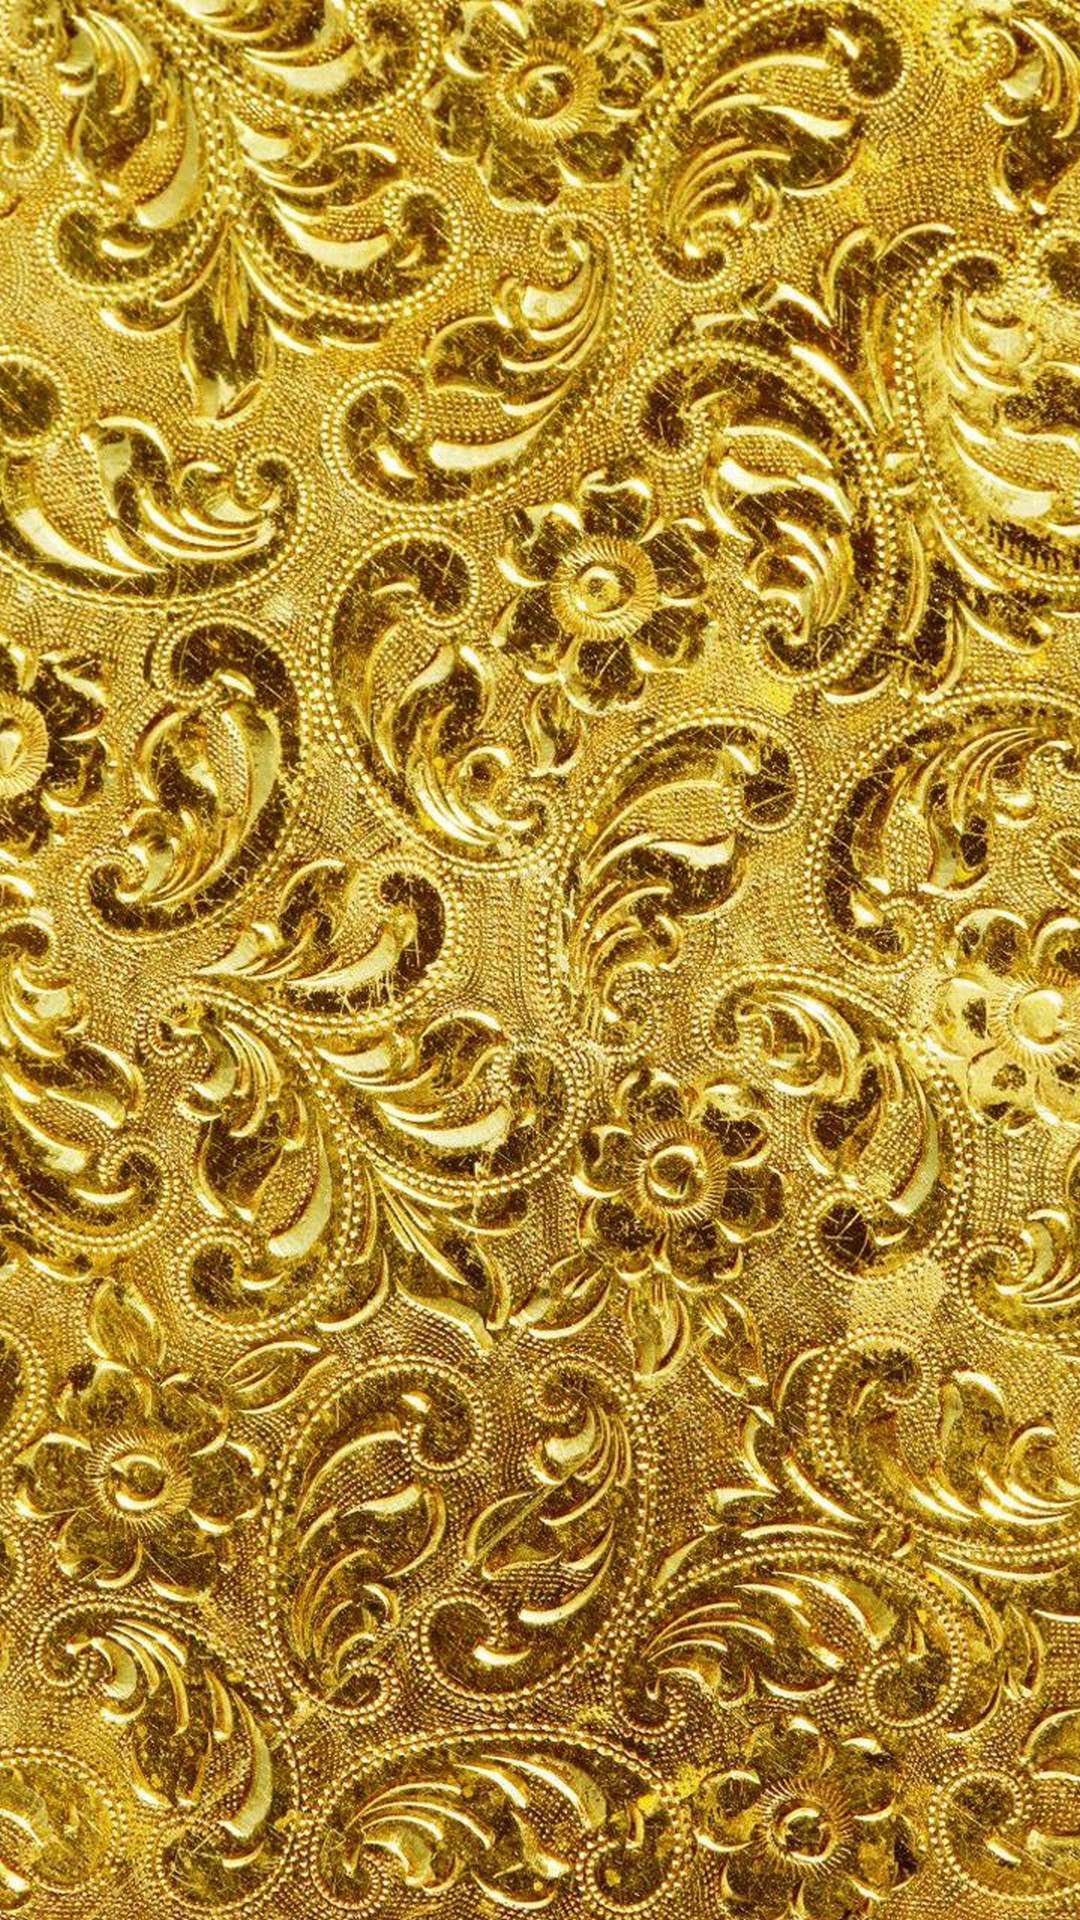 gold wallpaper designs,pattern,gold,metal,design,brass